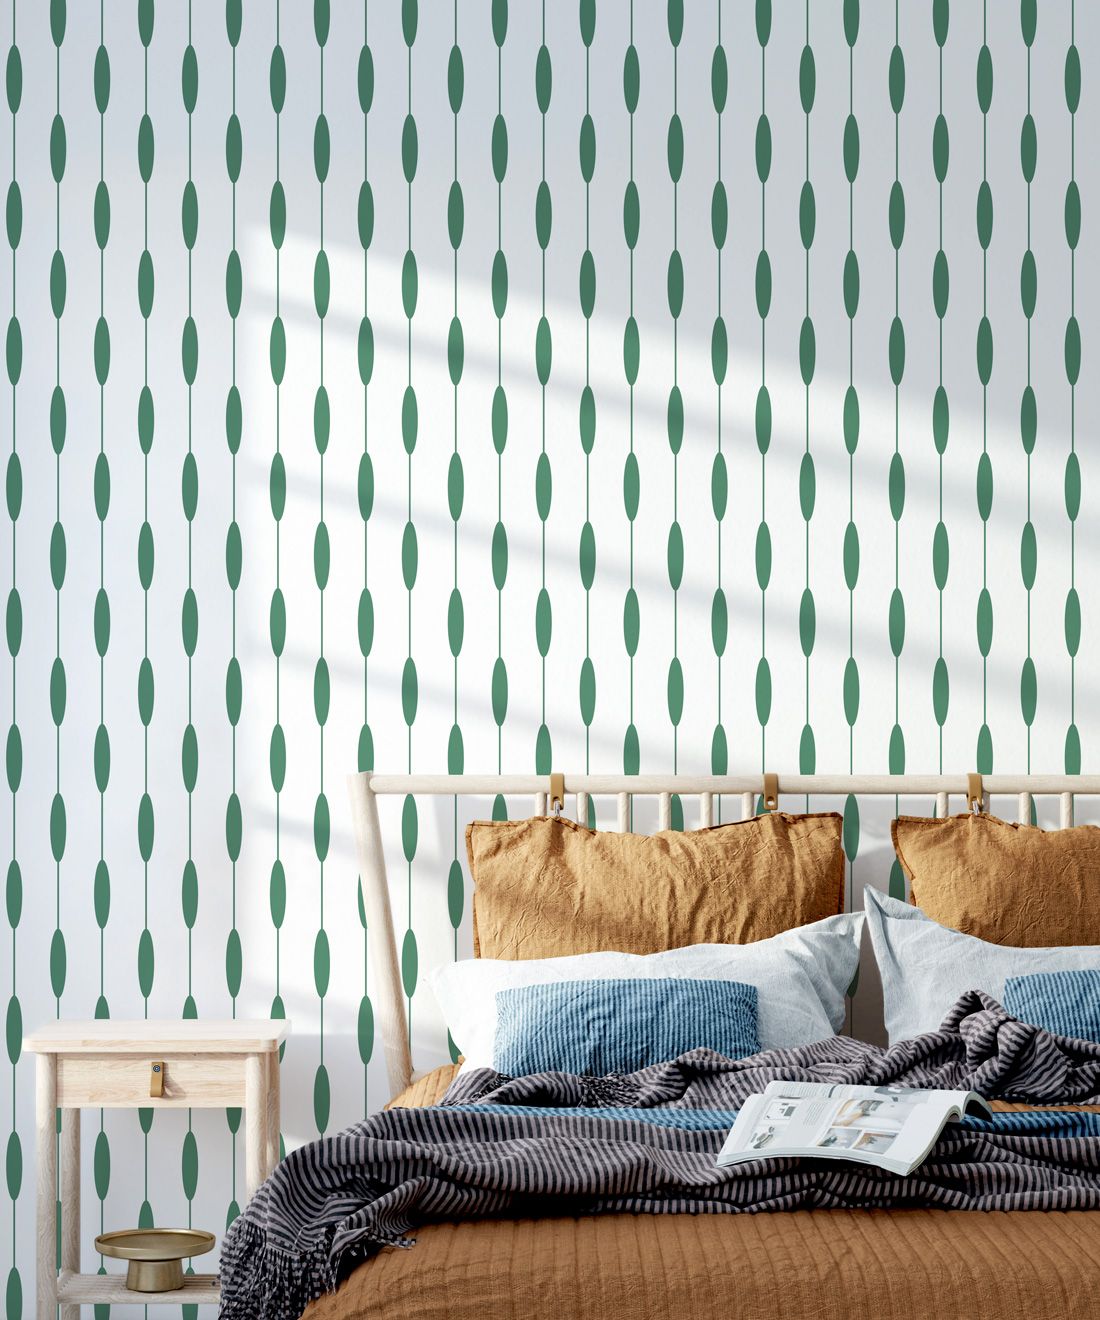 Bowline Wallpaper • Geometric Wallpaper • Striped Wallpaper • Green Wallpaper • Insitu